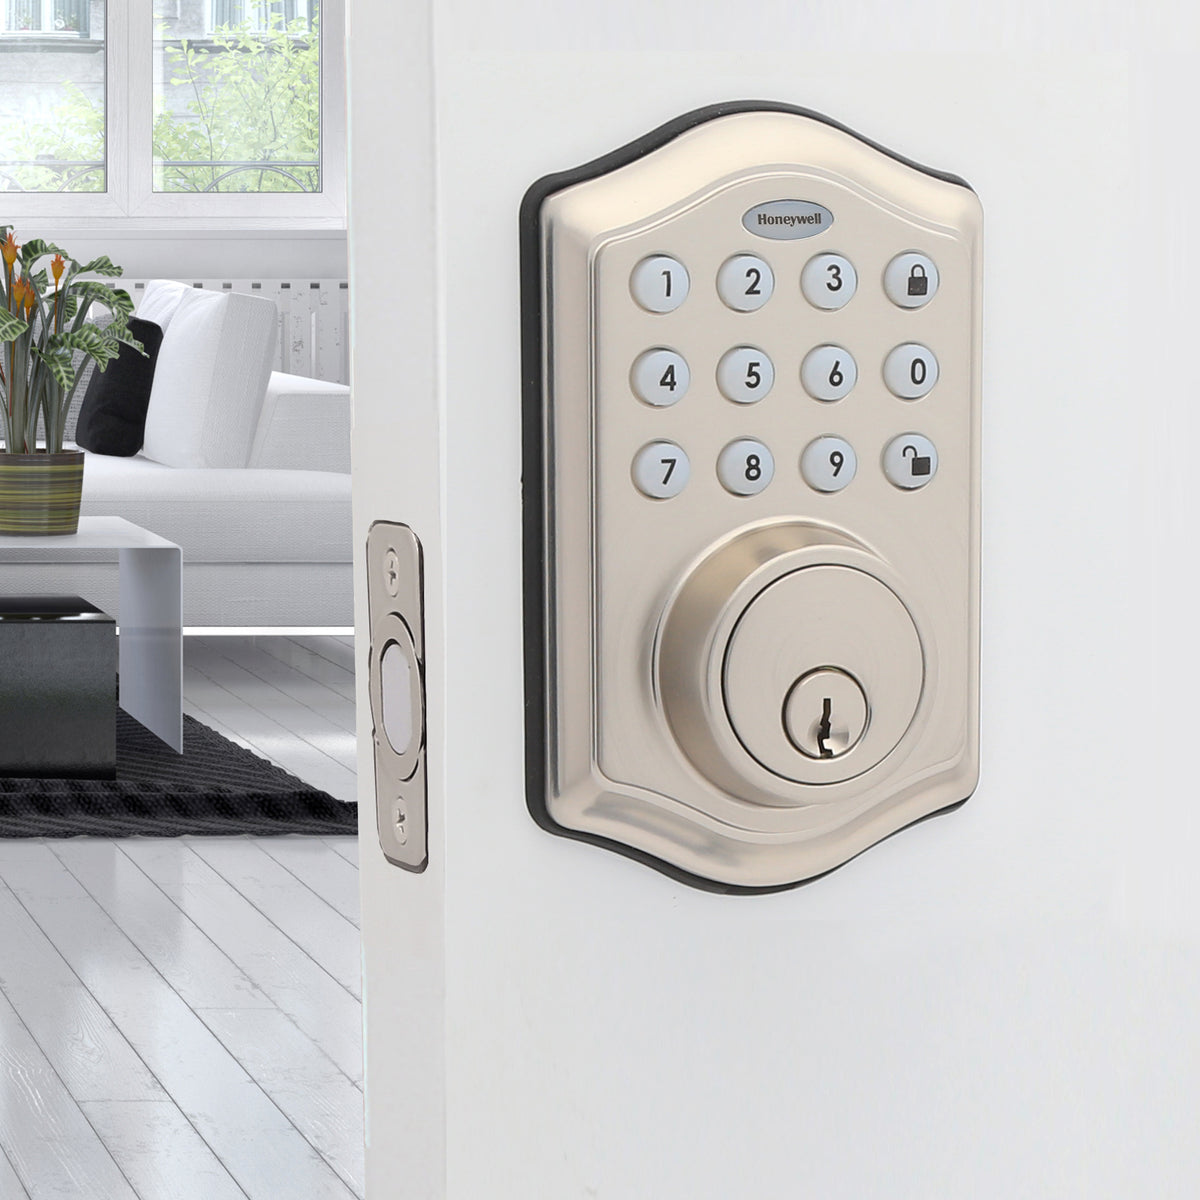 Honeywell 8712309L Electronic Deadbolt Door Lock with Keypad in Satin Nickel Lifestyle